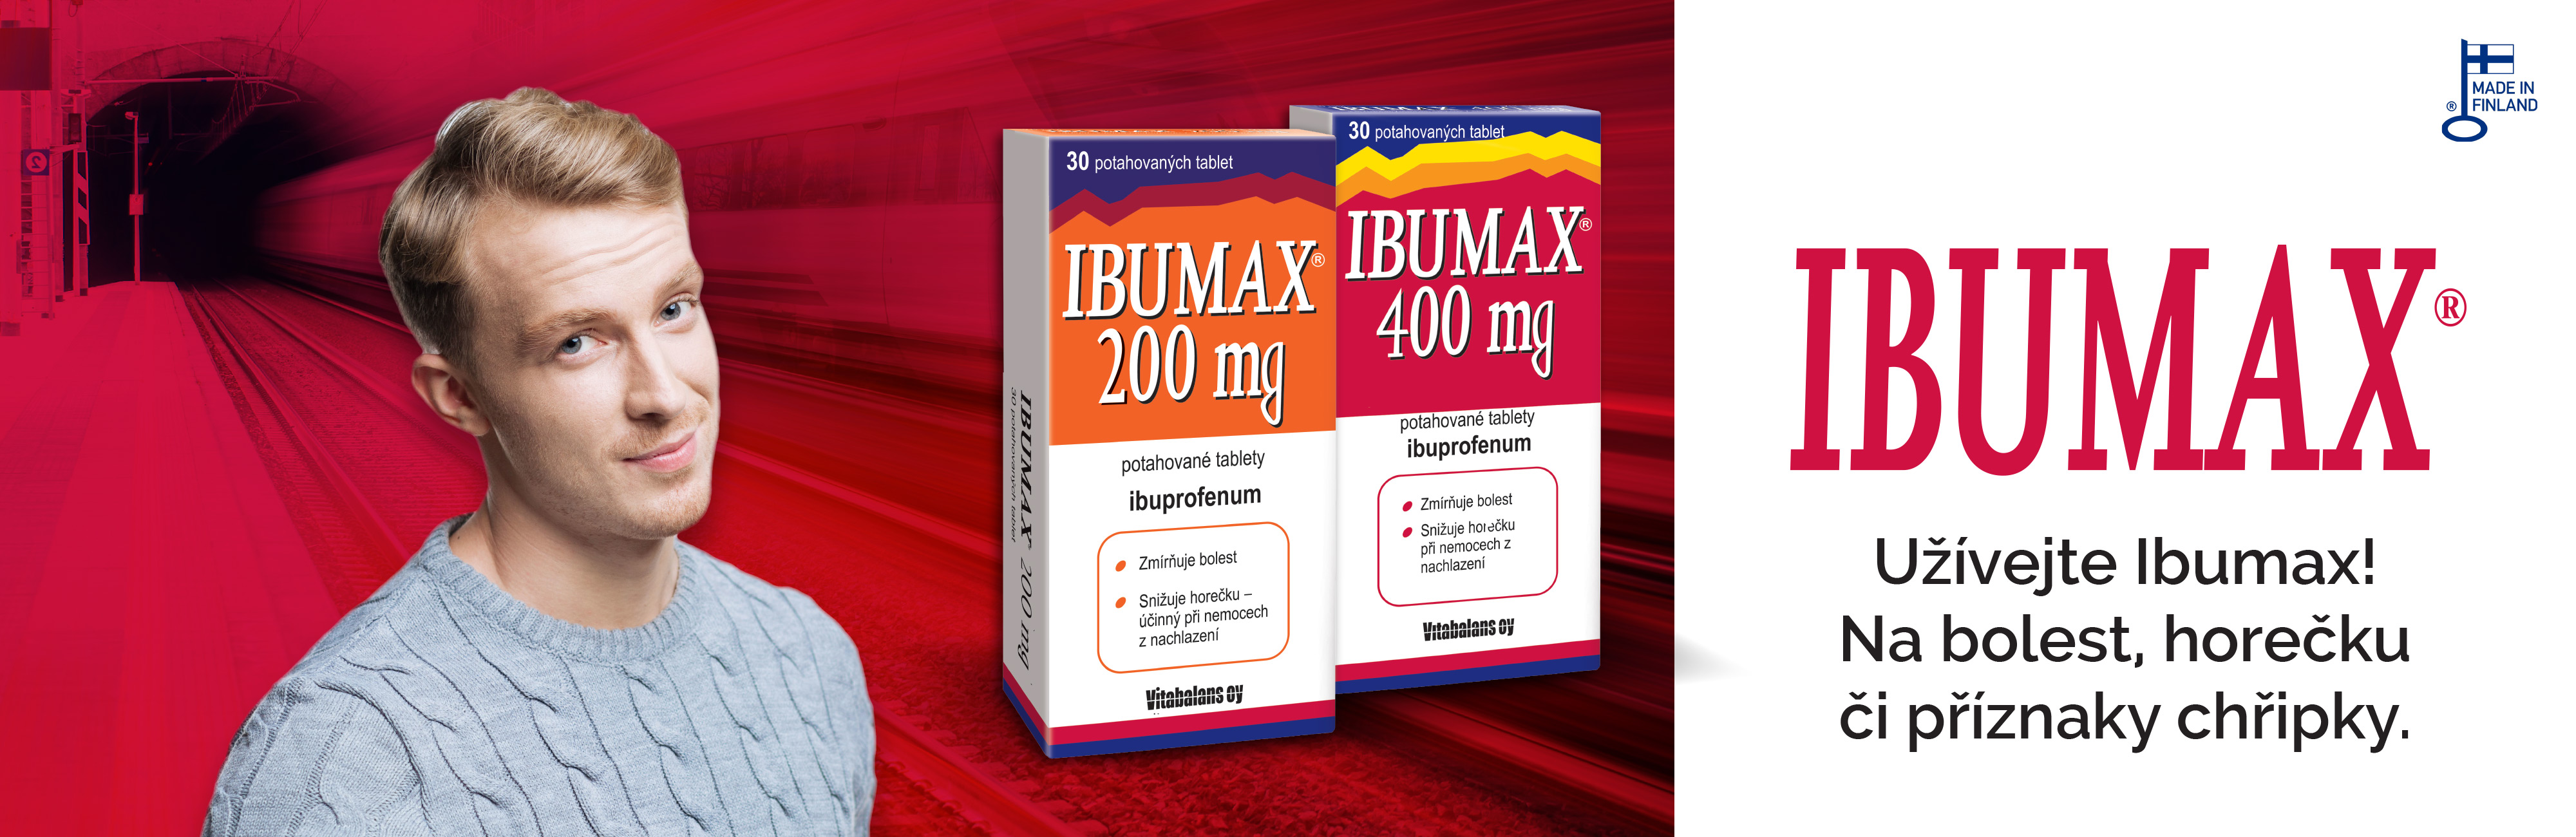 Obrázek IBUMAX 400 mg 50 potahovaných tablet